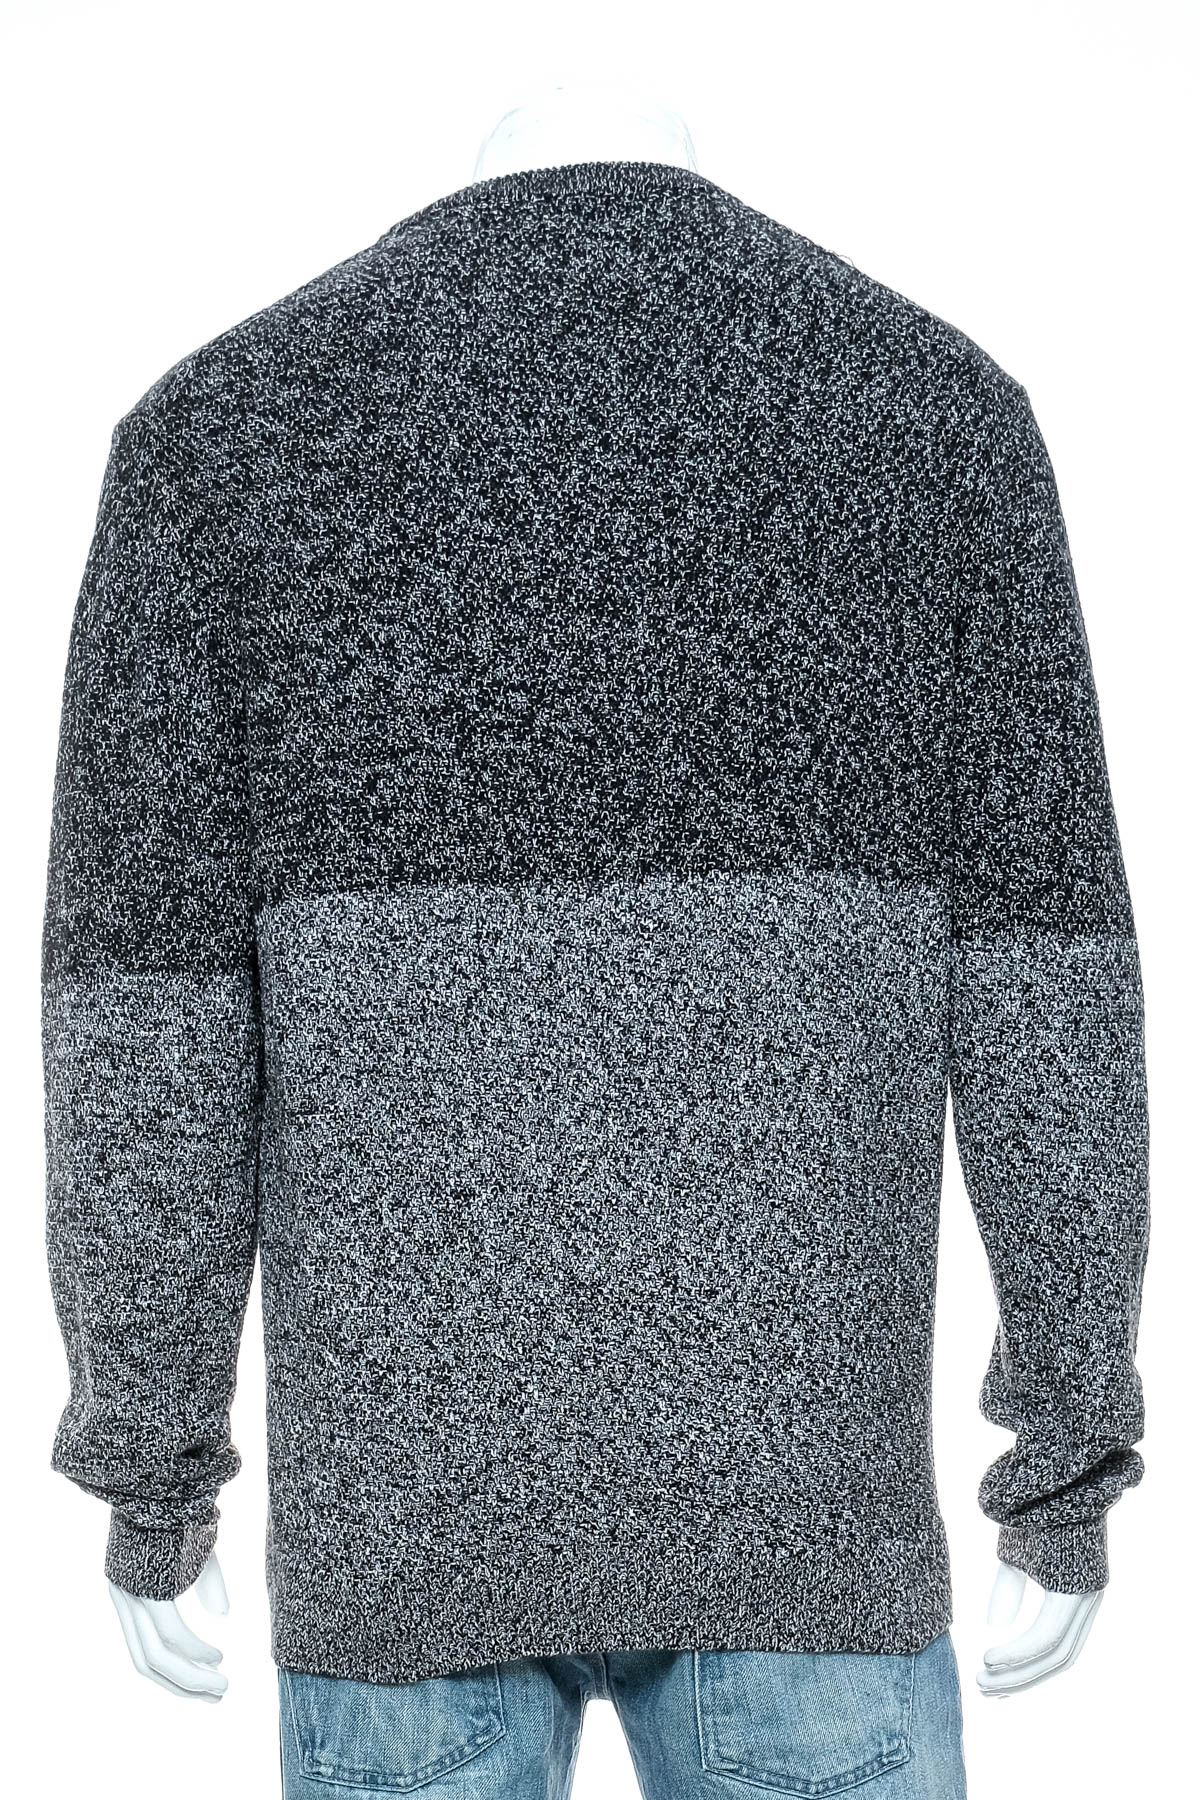 Men's sweater - Target - 1